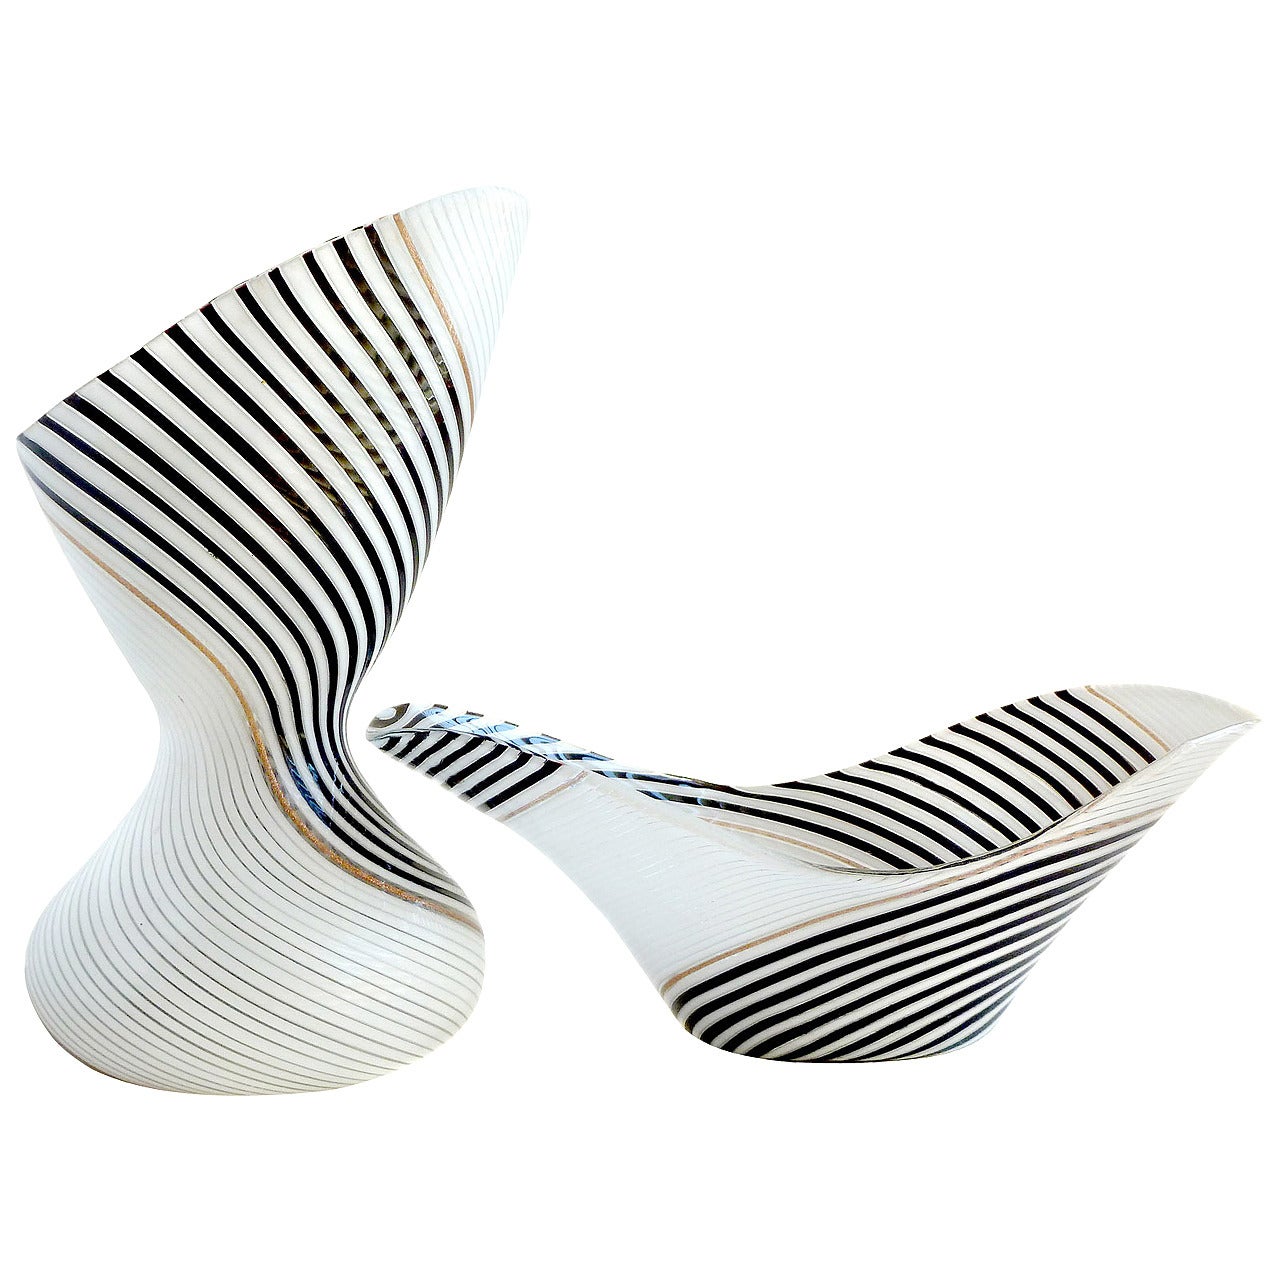 Dino Martens for Aureliano Toso, Murano Italian Art Glass Vase and Bowl